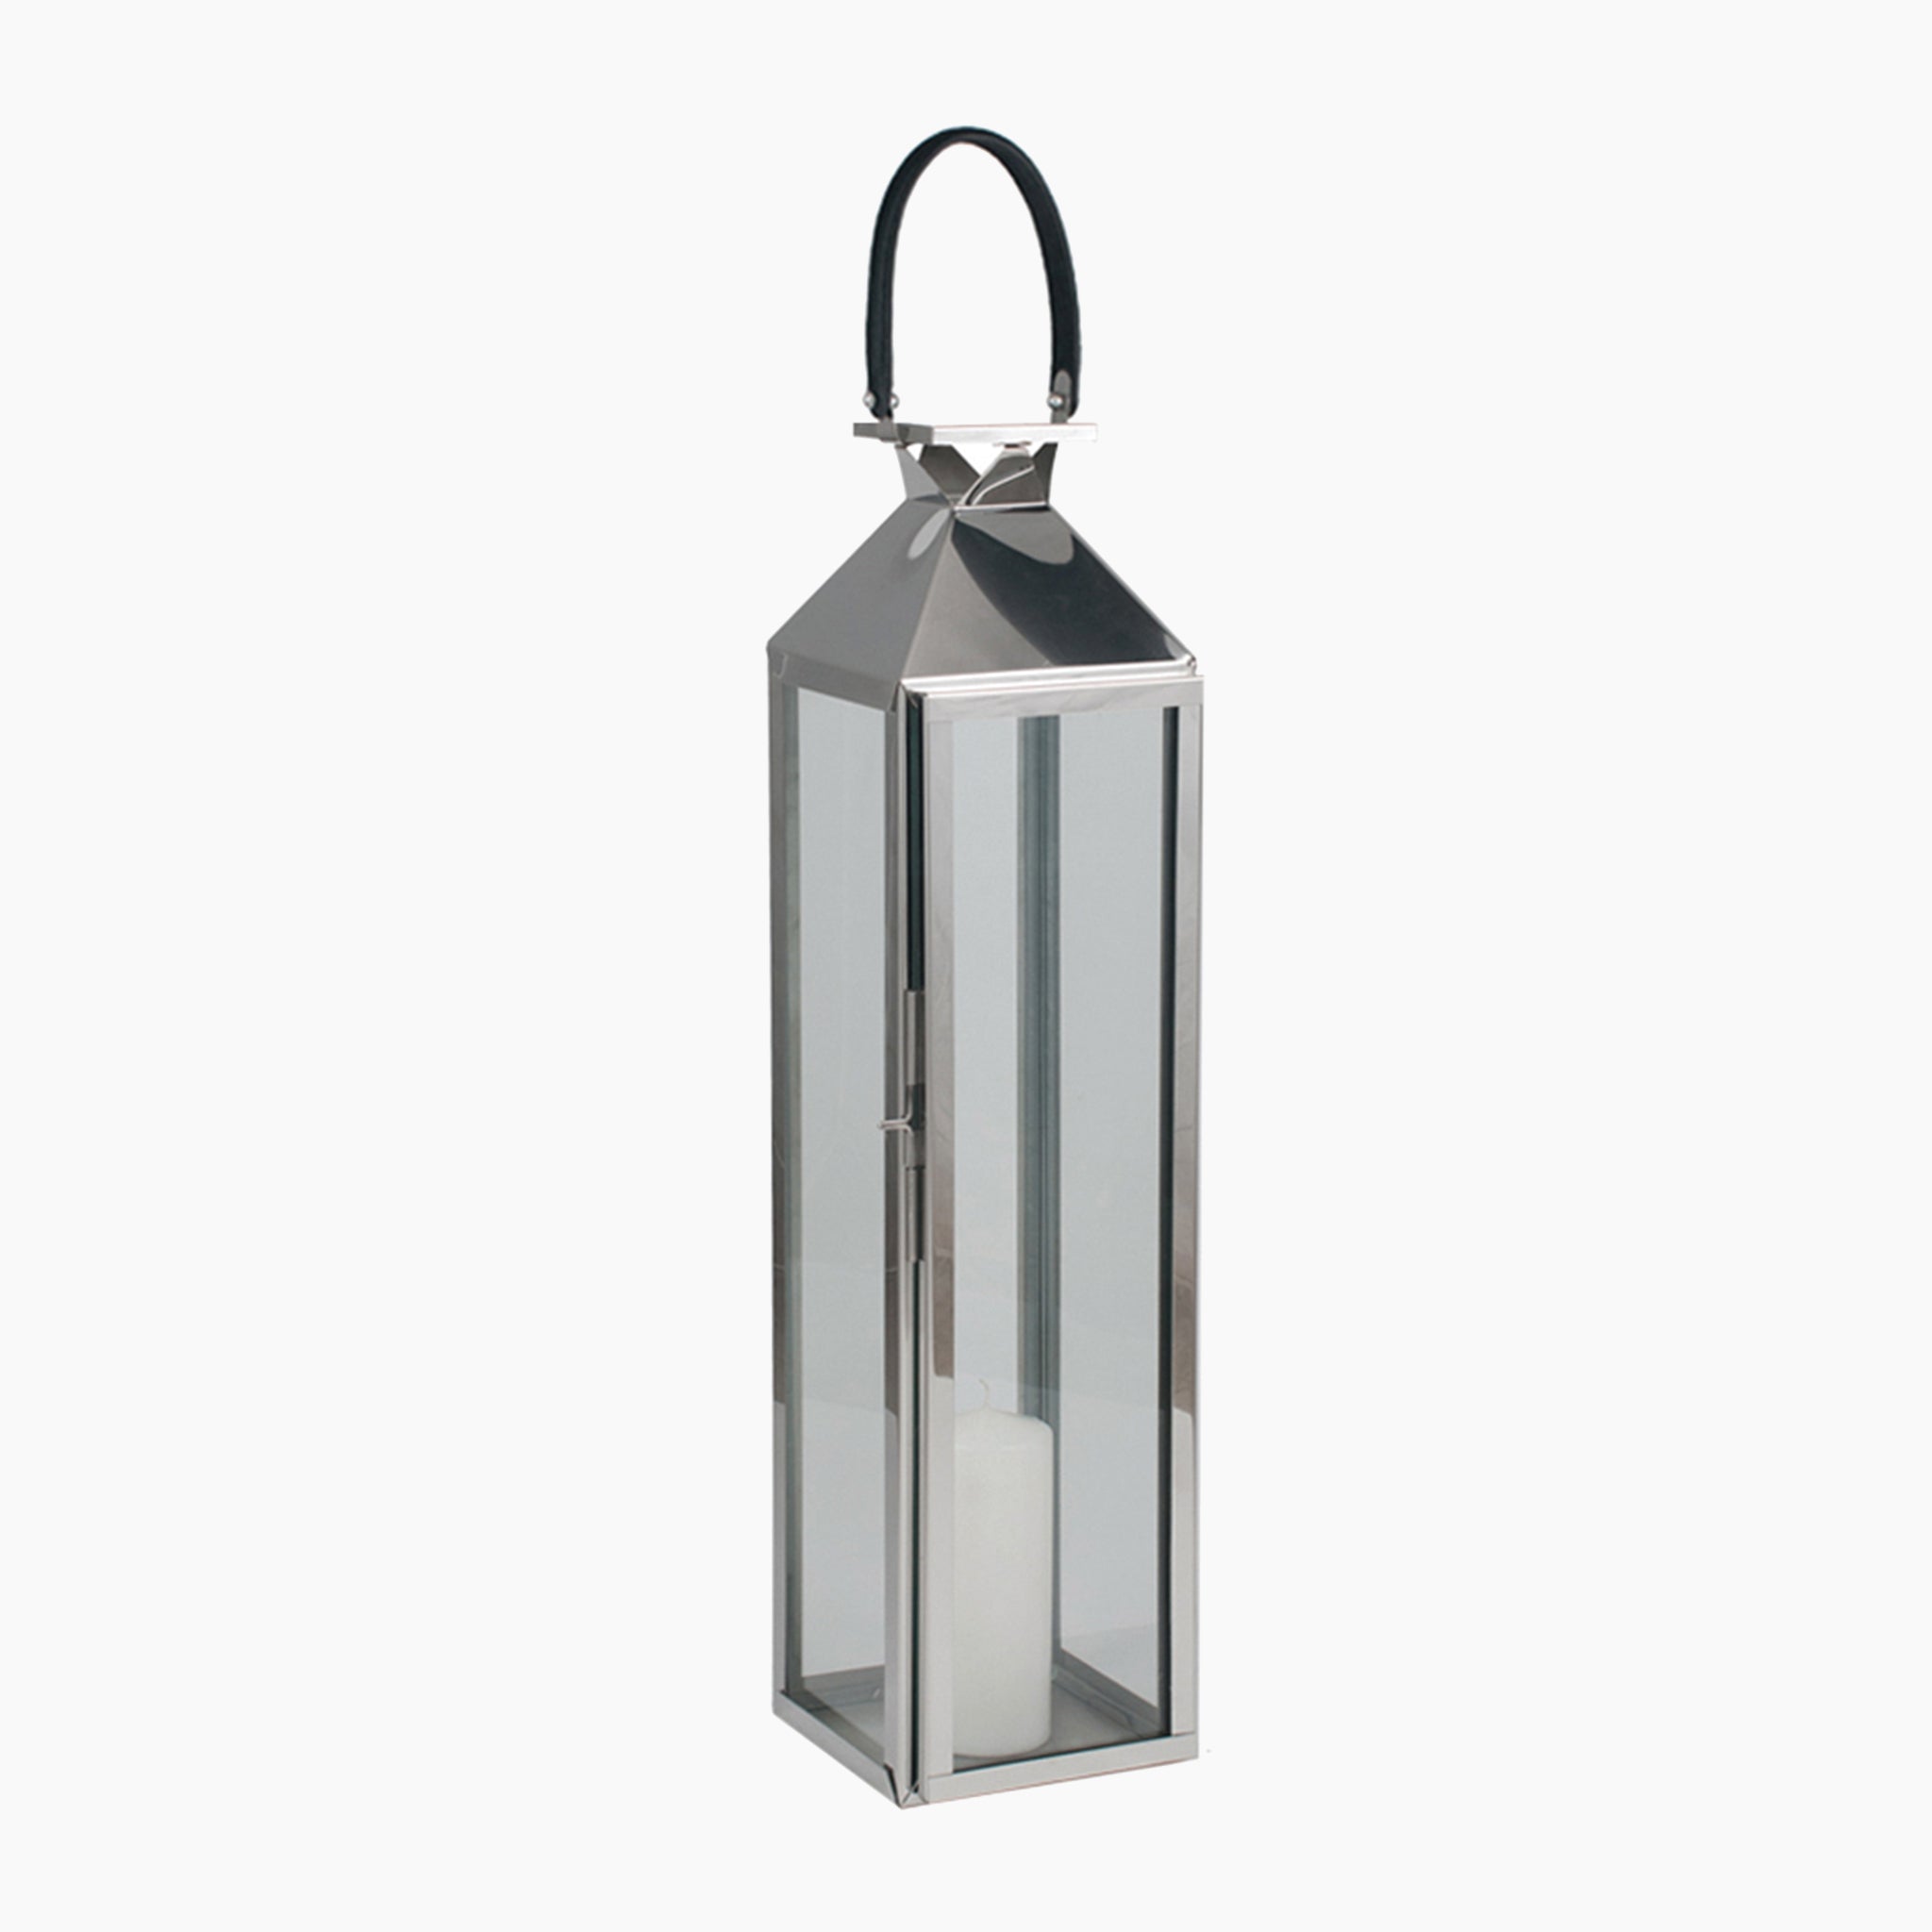 Stainless Steel and Glass Medium Lantern in Nickel